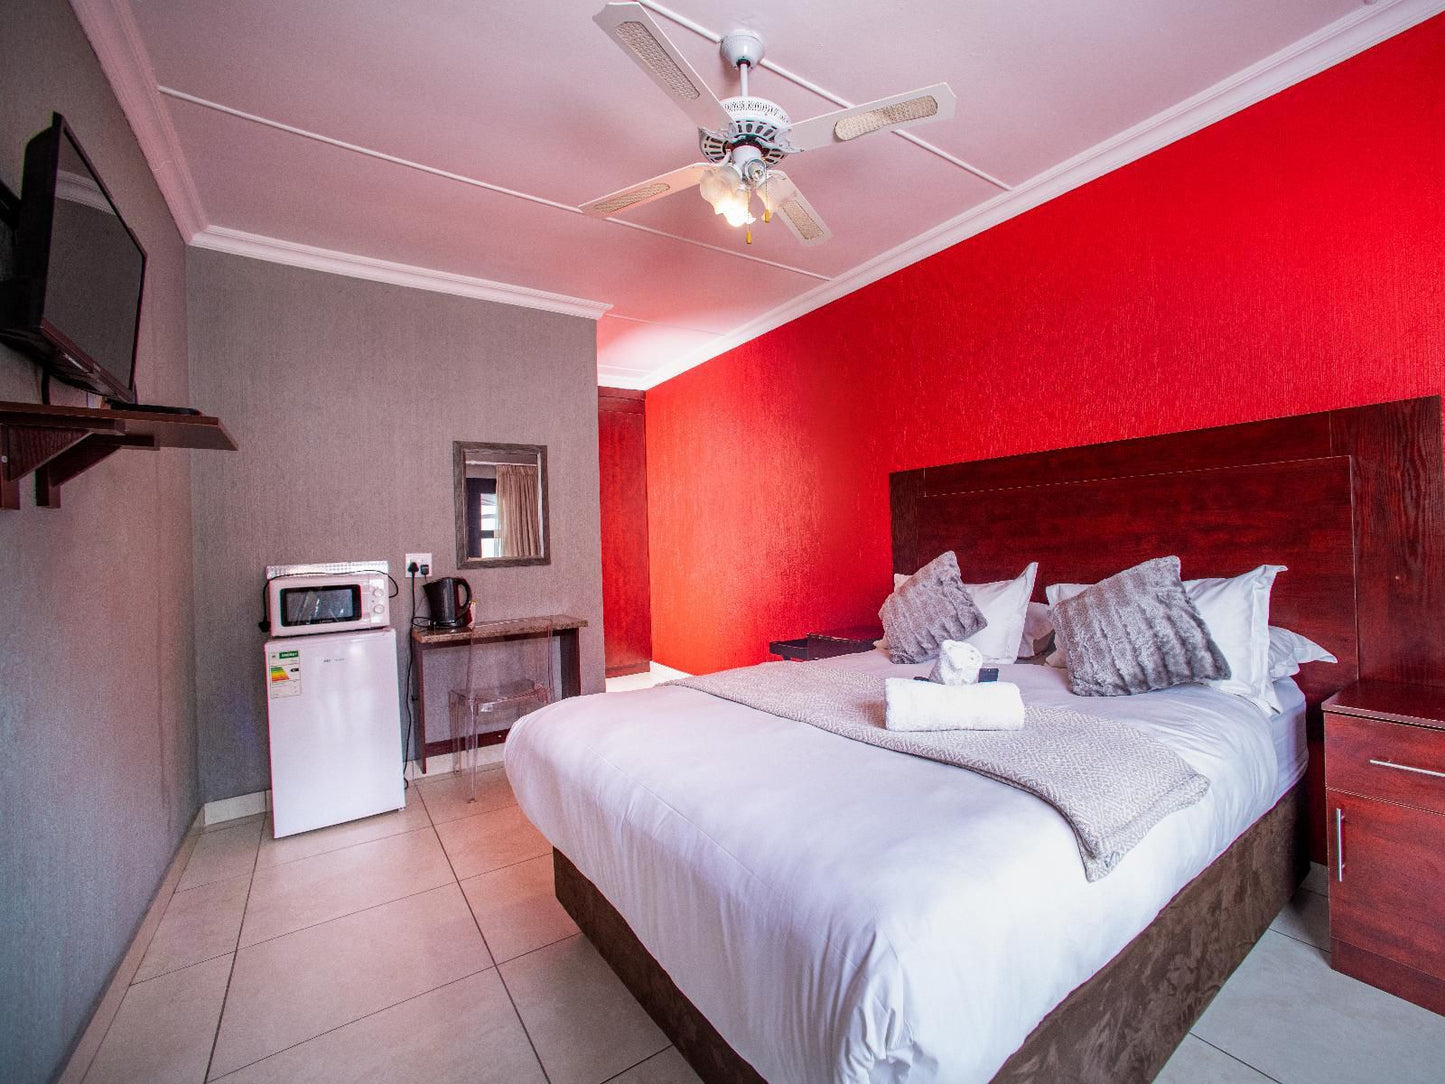 Khayalami Hotels Standerton Standerton Mpumalanga South Africa 